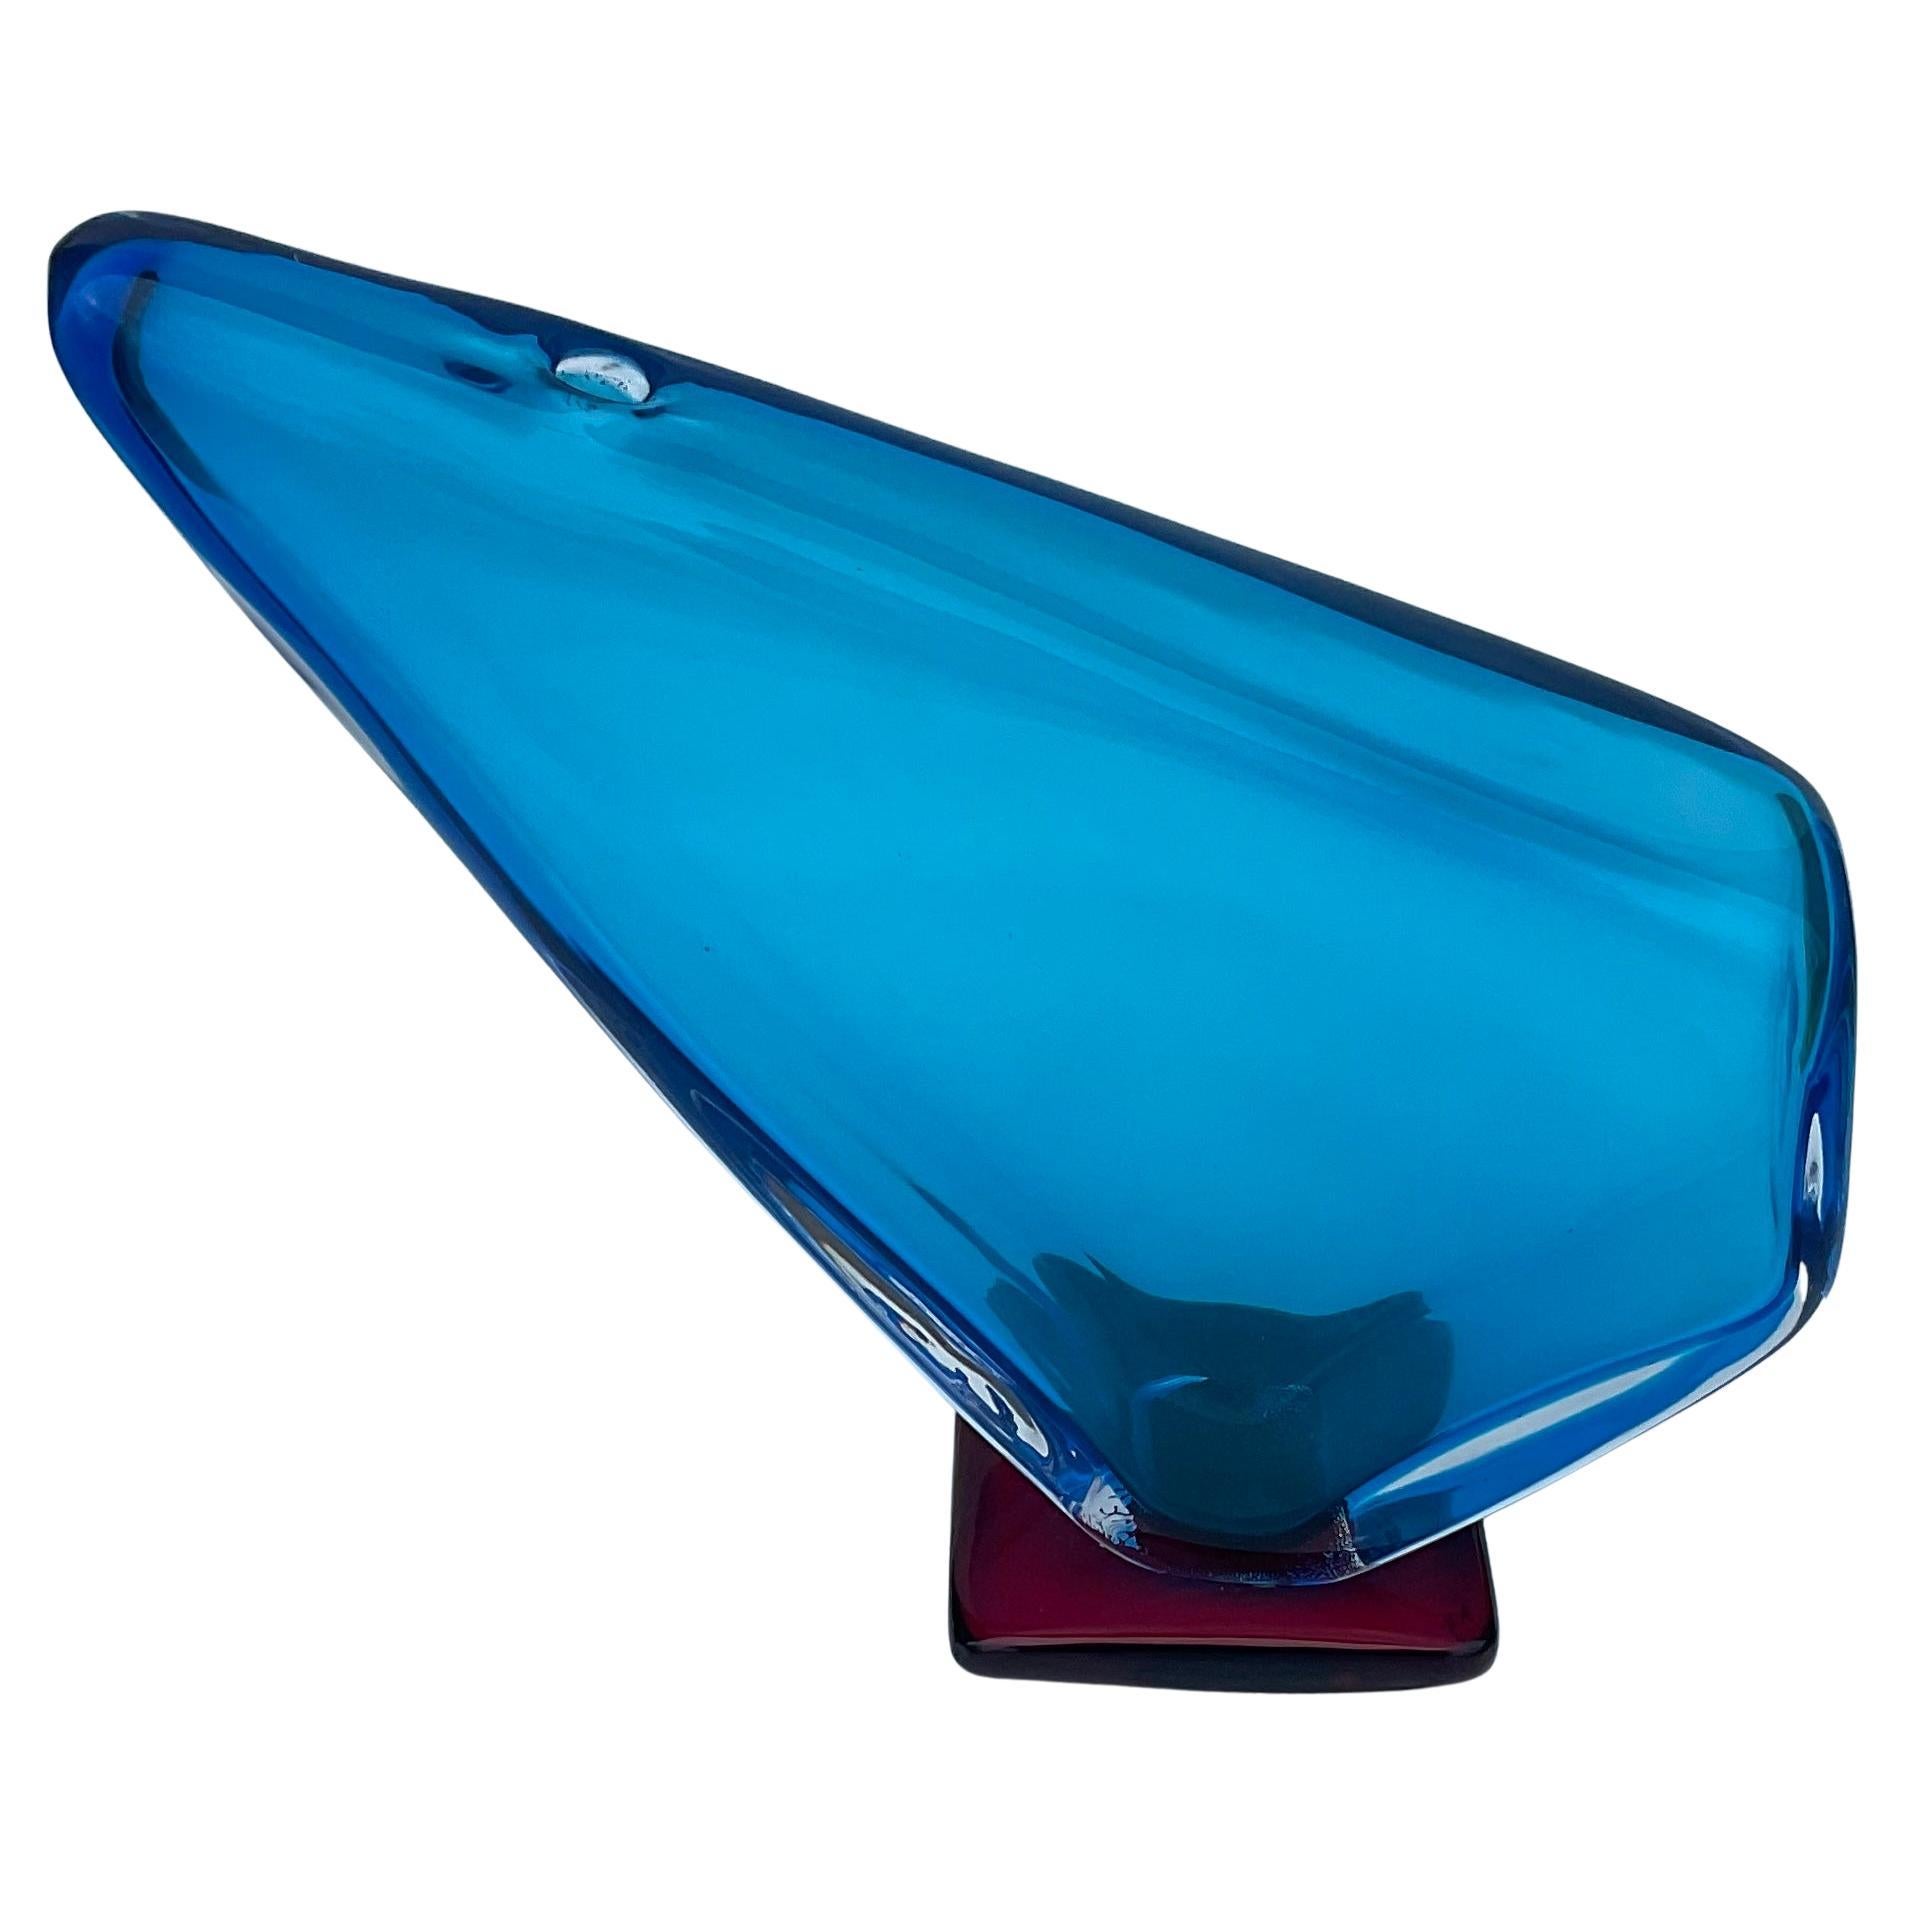 Alfredo Barbini Signed Triangular Blue Murano Glass Vase with Irridized Surface